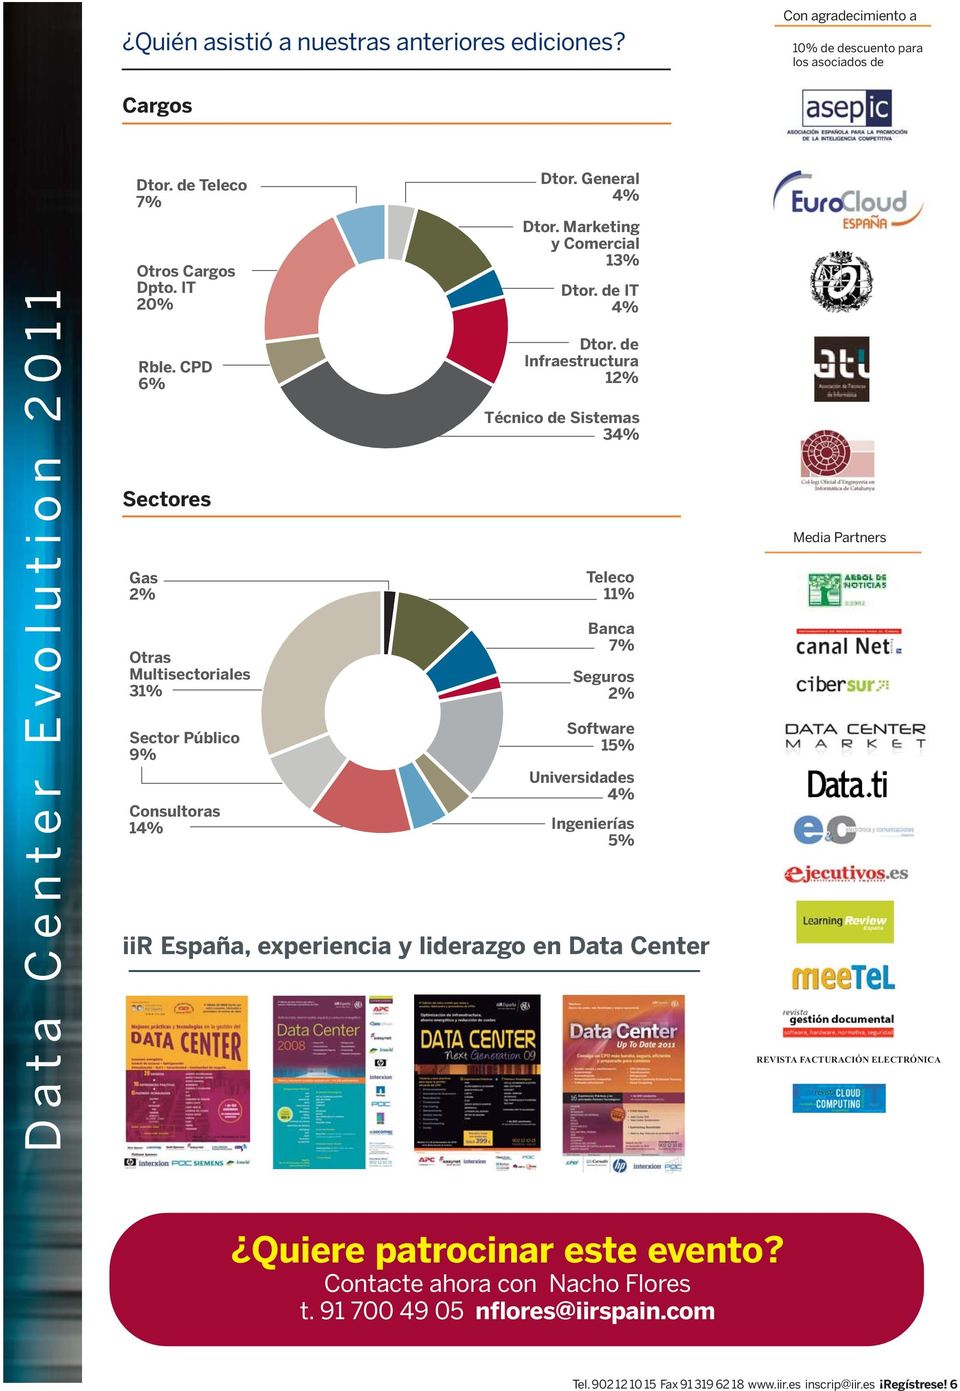 de Infraestructura 12% Técnico de Sistemas 34% Teleco 11% Banca 7% Seguros 2% Software 15% Universidades 4% Ingenierías 5% iir España, experiencia y liderazgo en Data Center Media